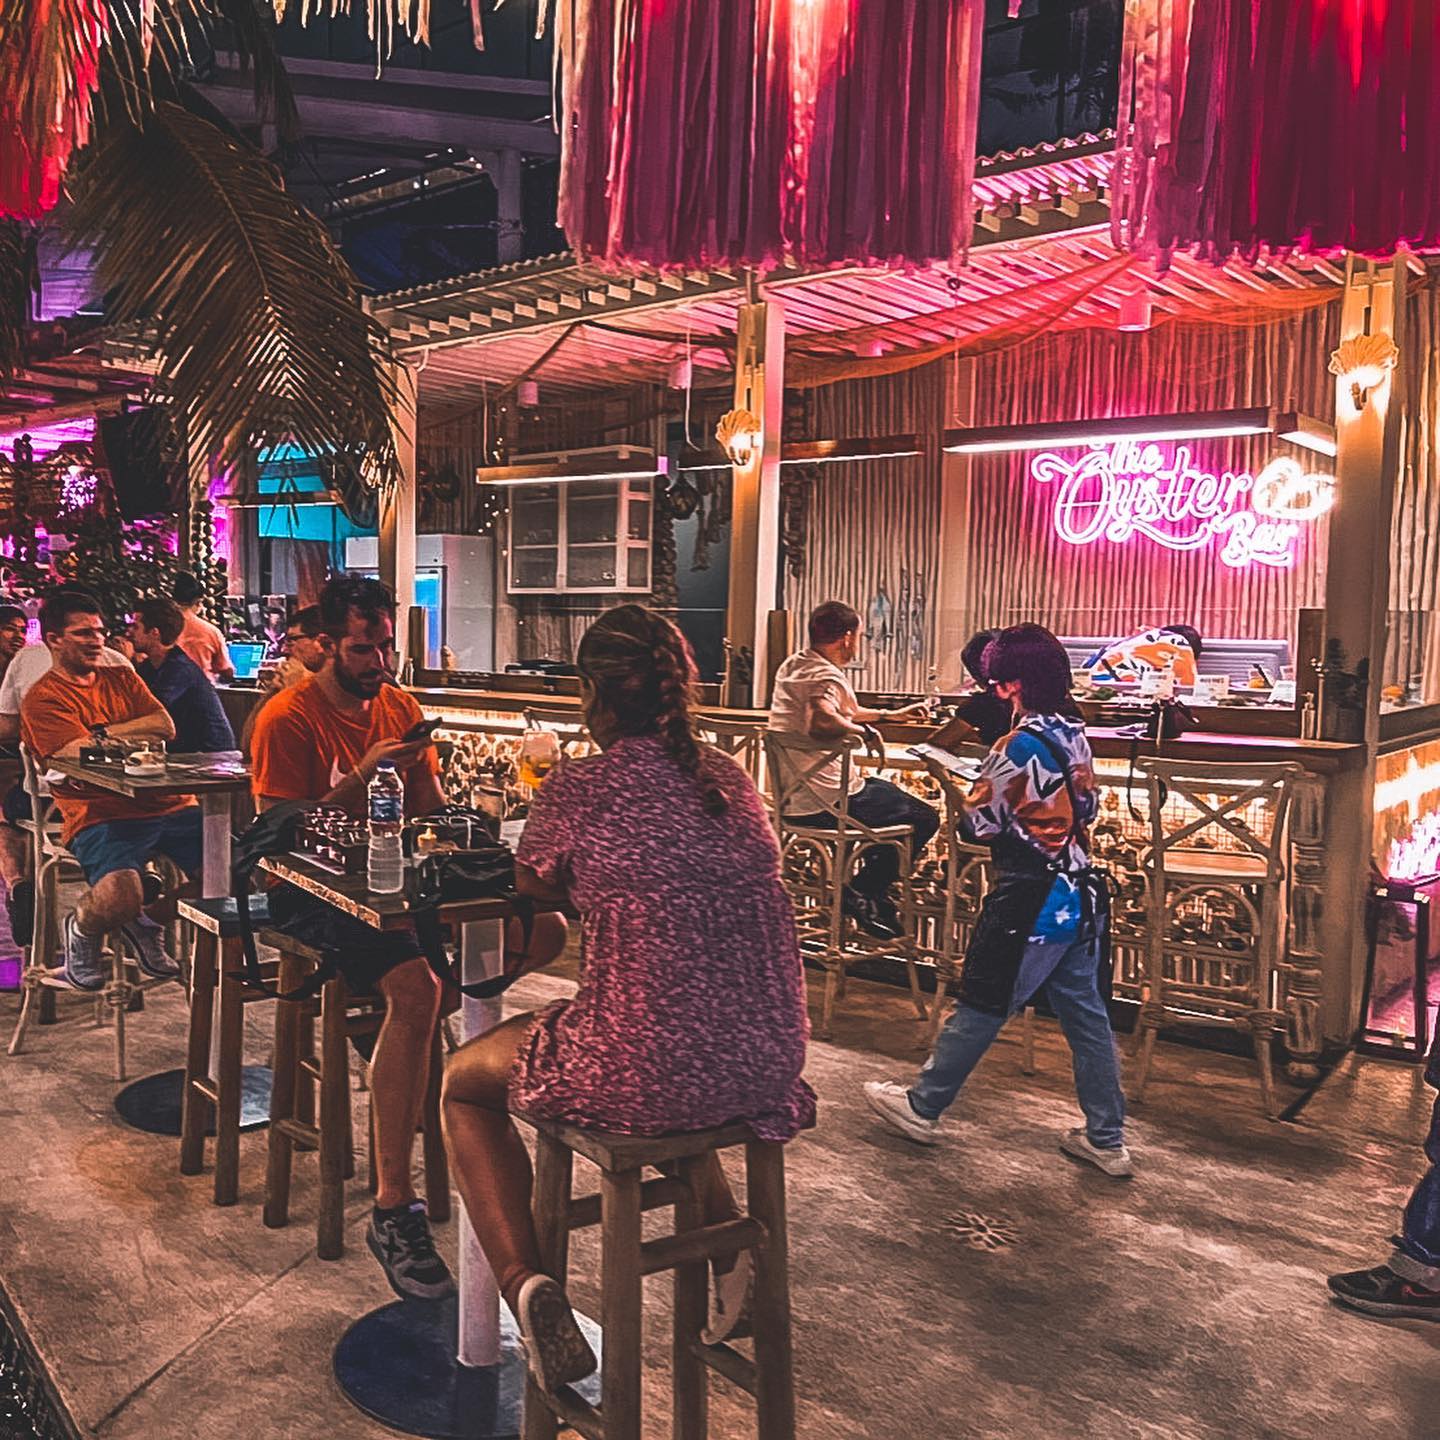 The Oyster bar x Escape Bangkok (The Oyster bar x Escape Bangkok) : Bangkok (กรุงเทพมหานคร)